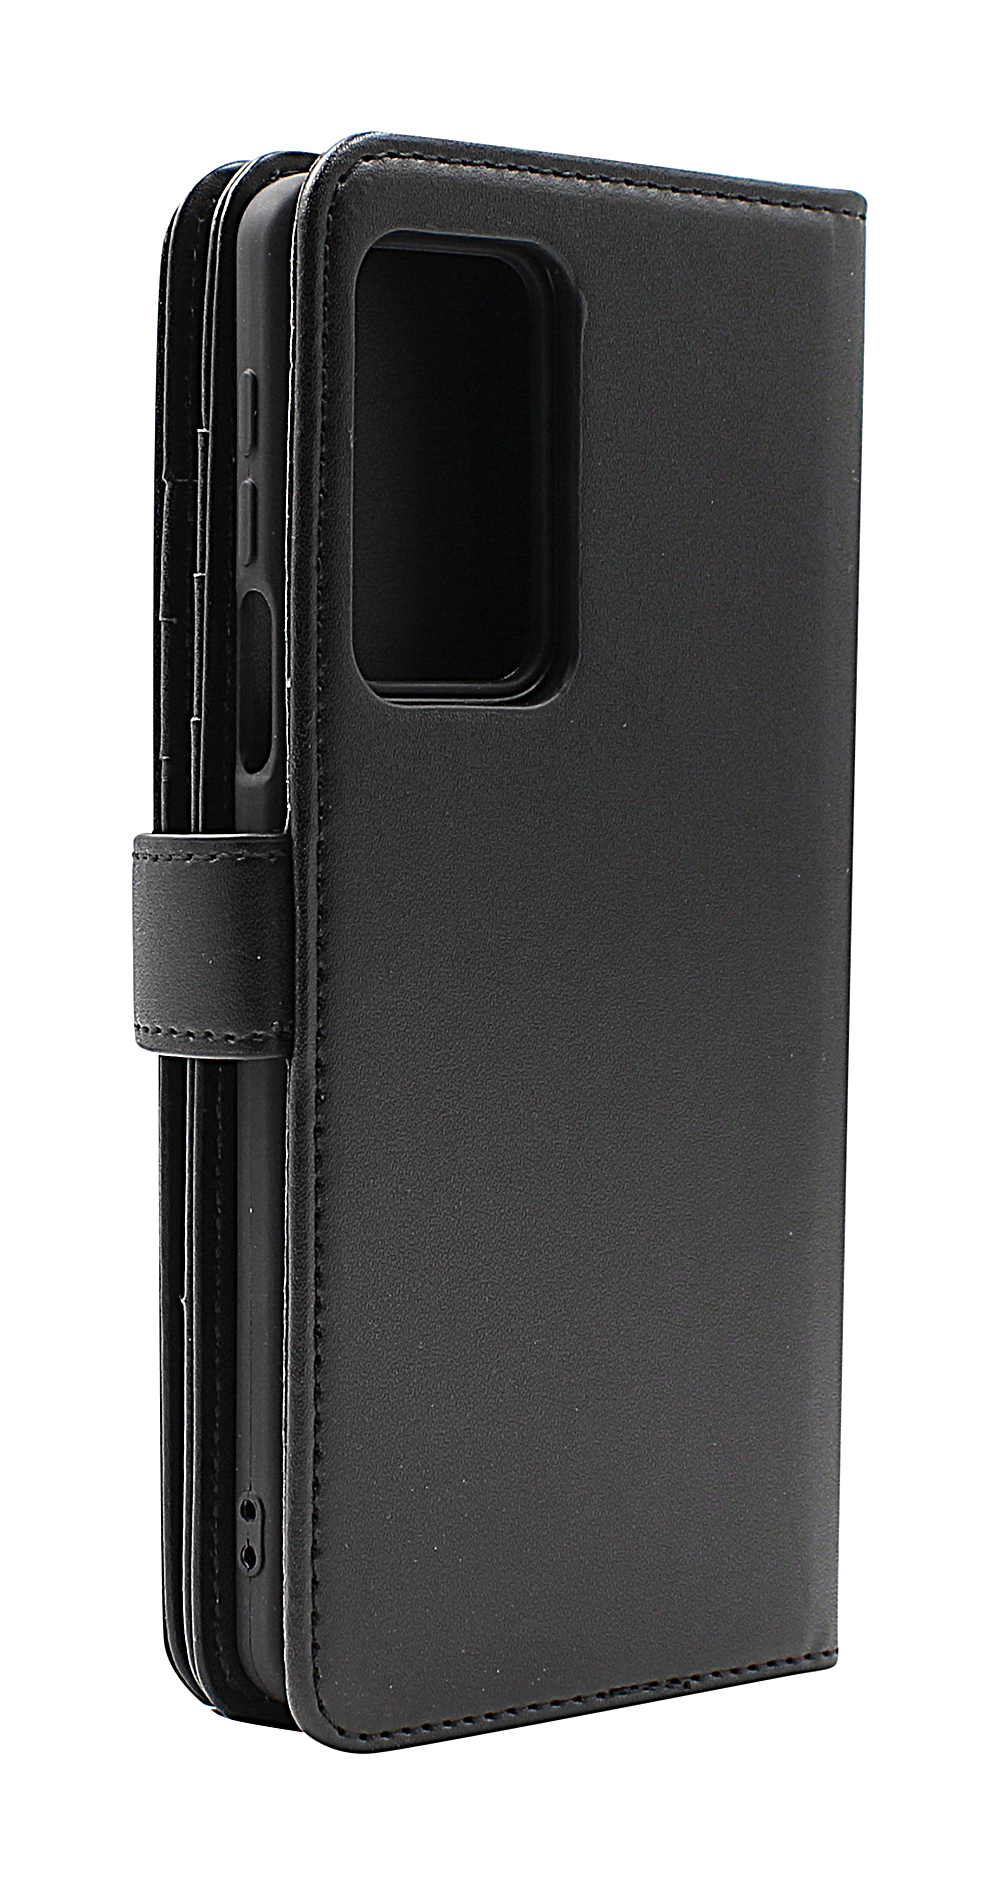 Skimblocker XL Magnet Wallet Motorola Edge 20 Pro